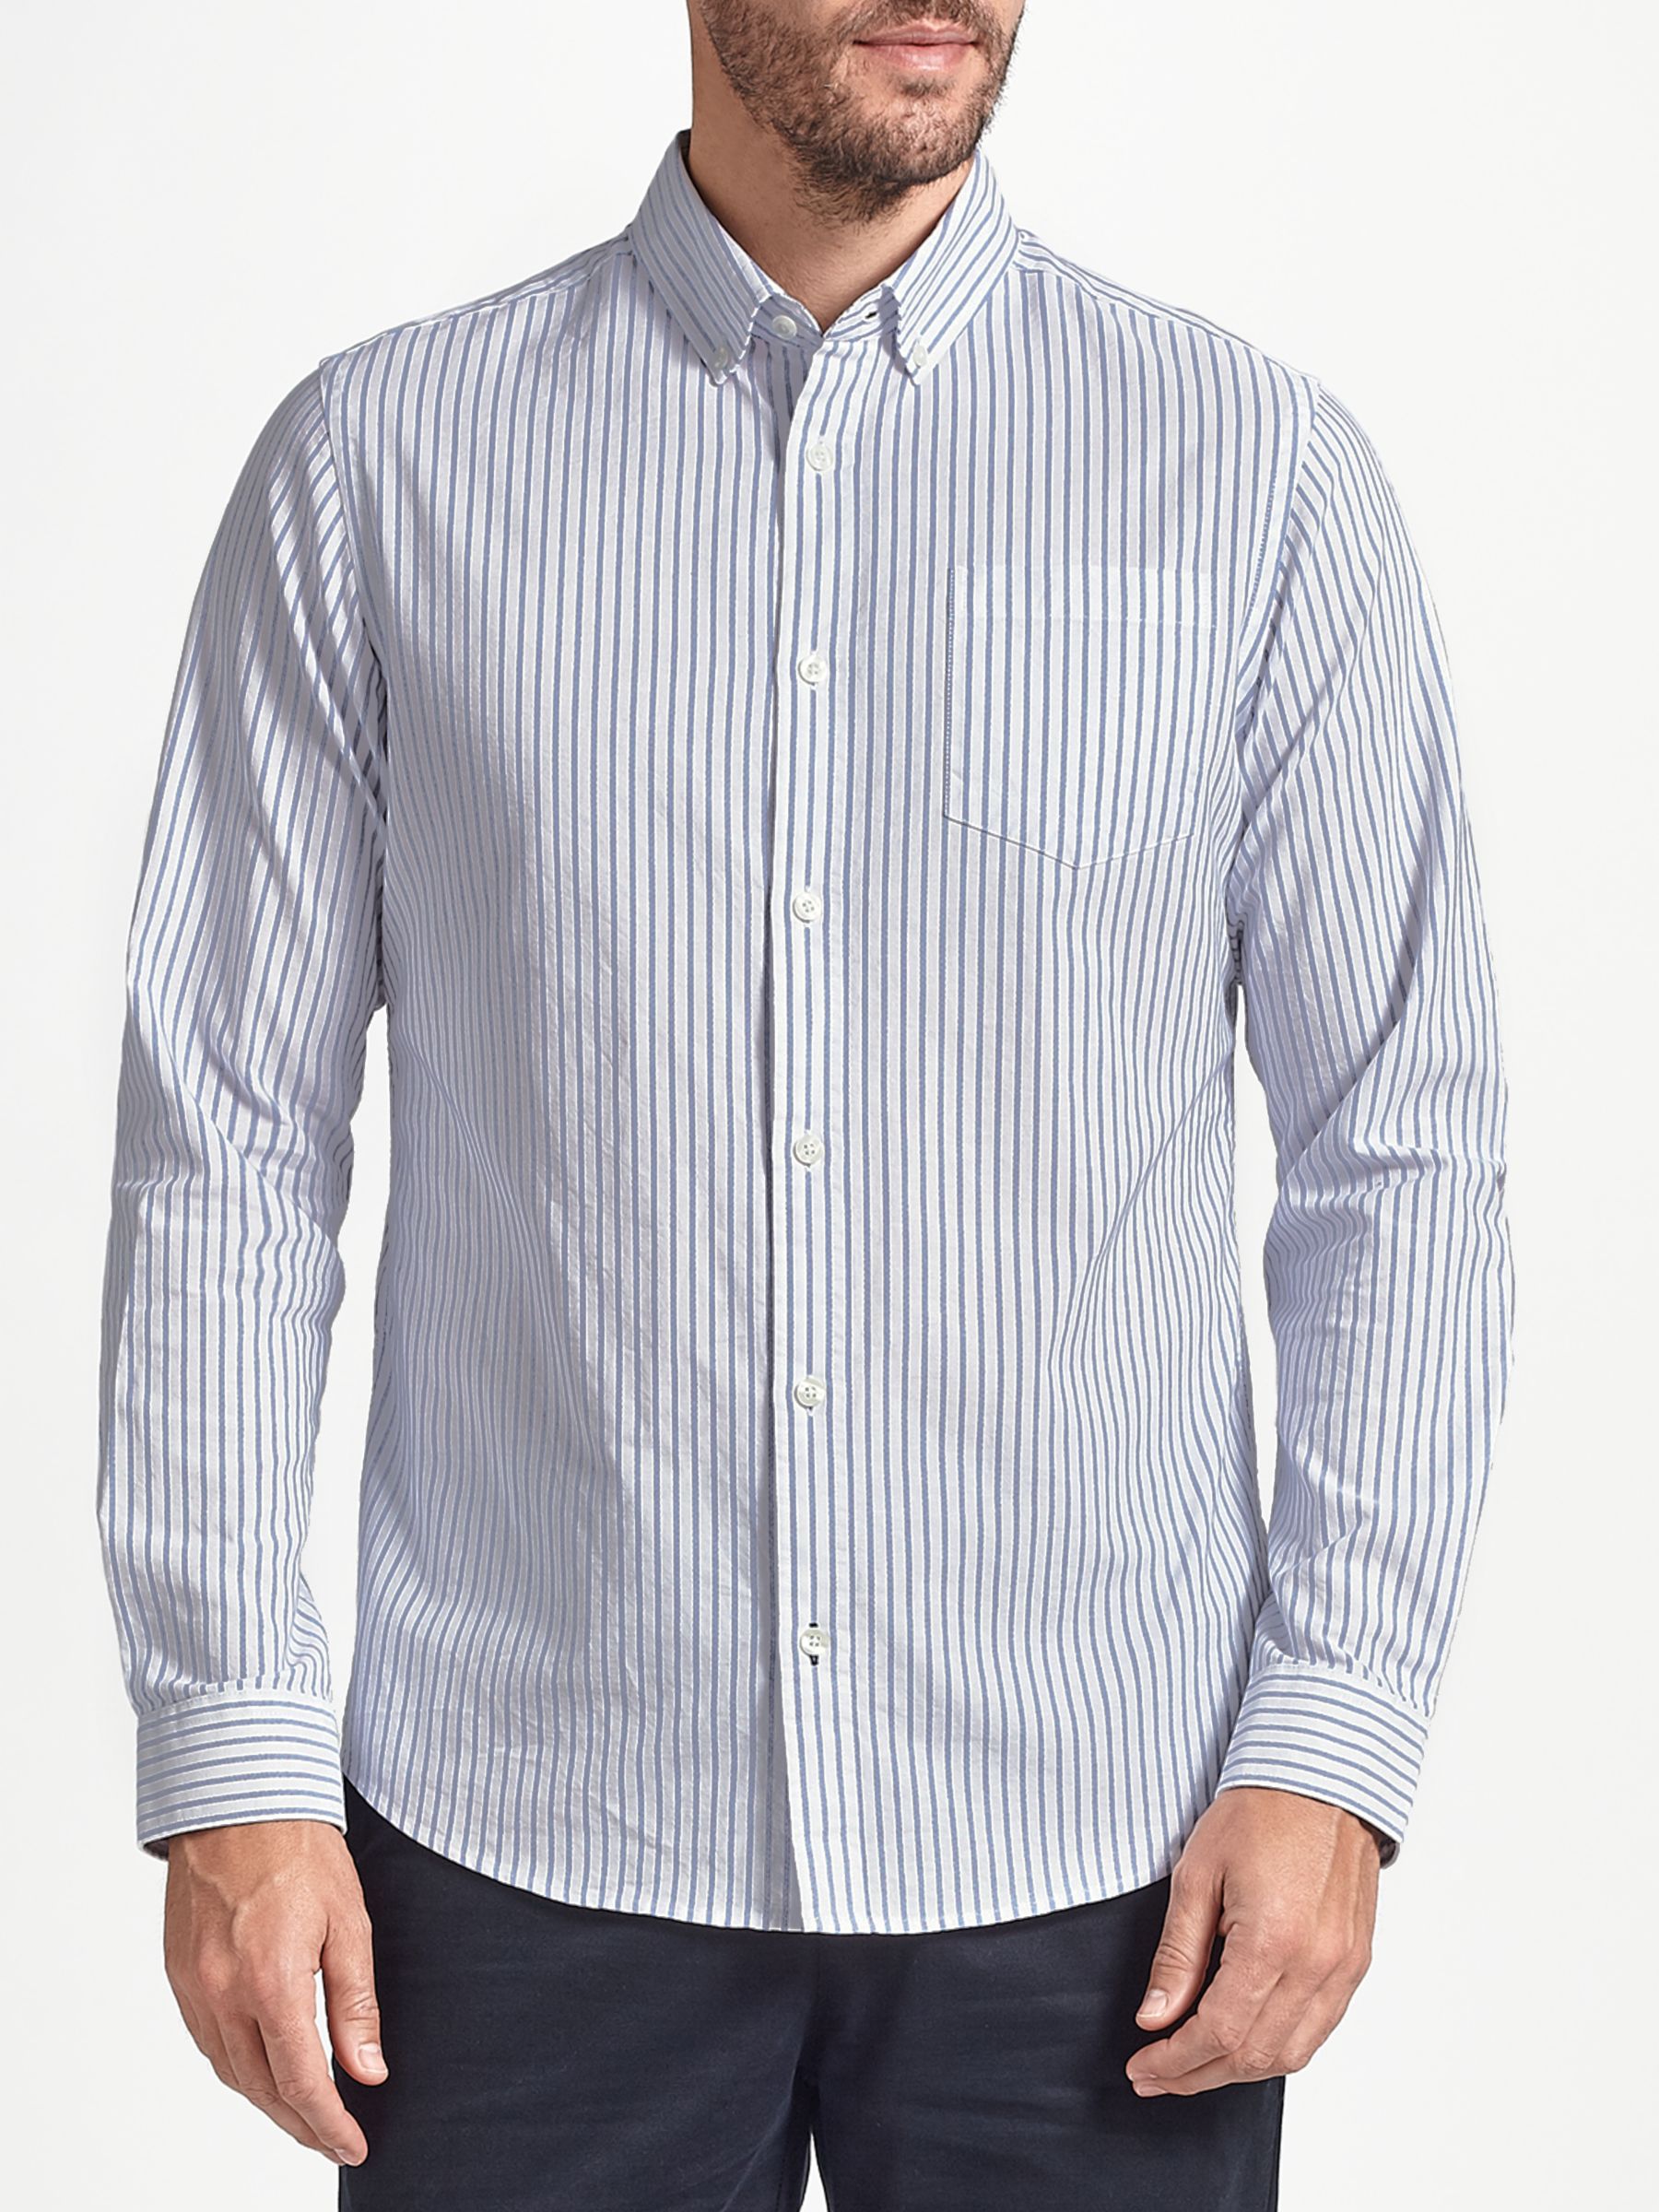 John Lewis & Partners Oxford Stripe Shirt